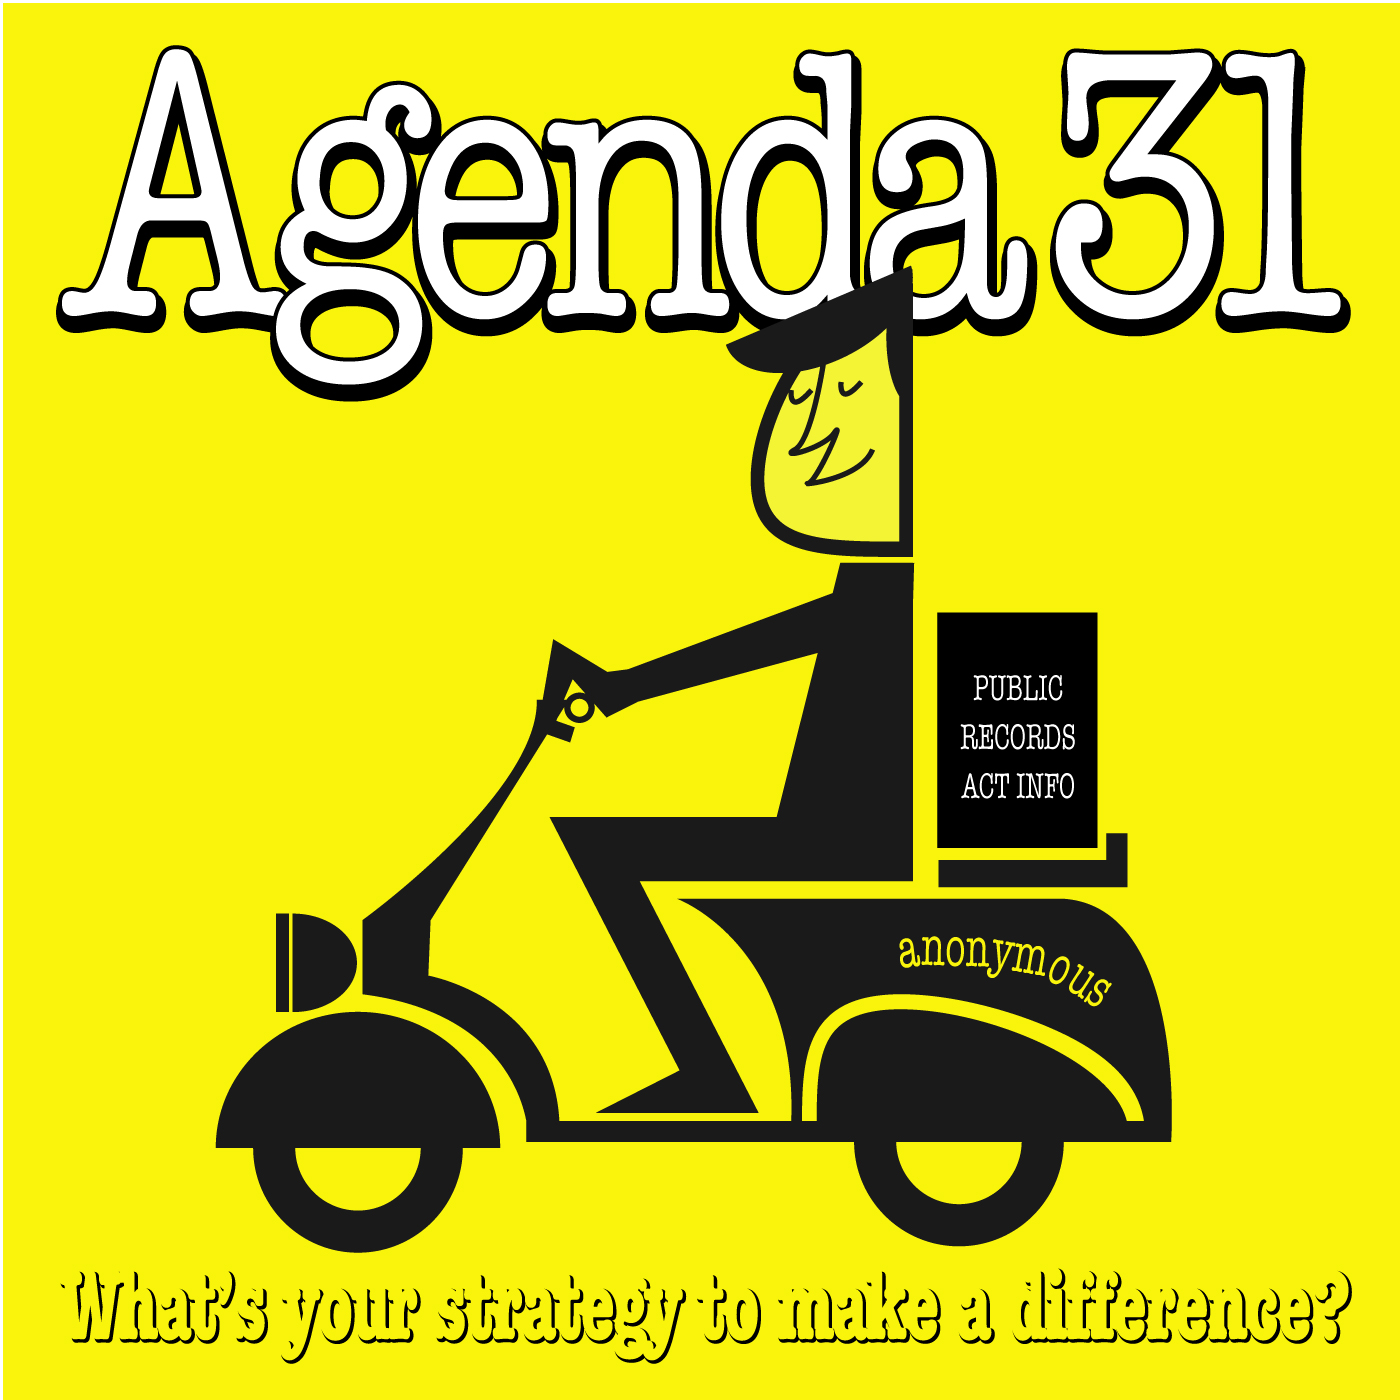 Agenda31 Ep 063 Bad Motor Scooter